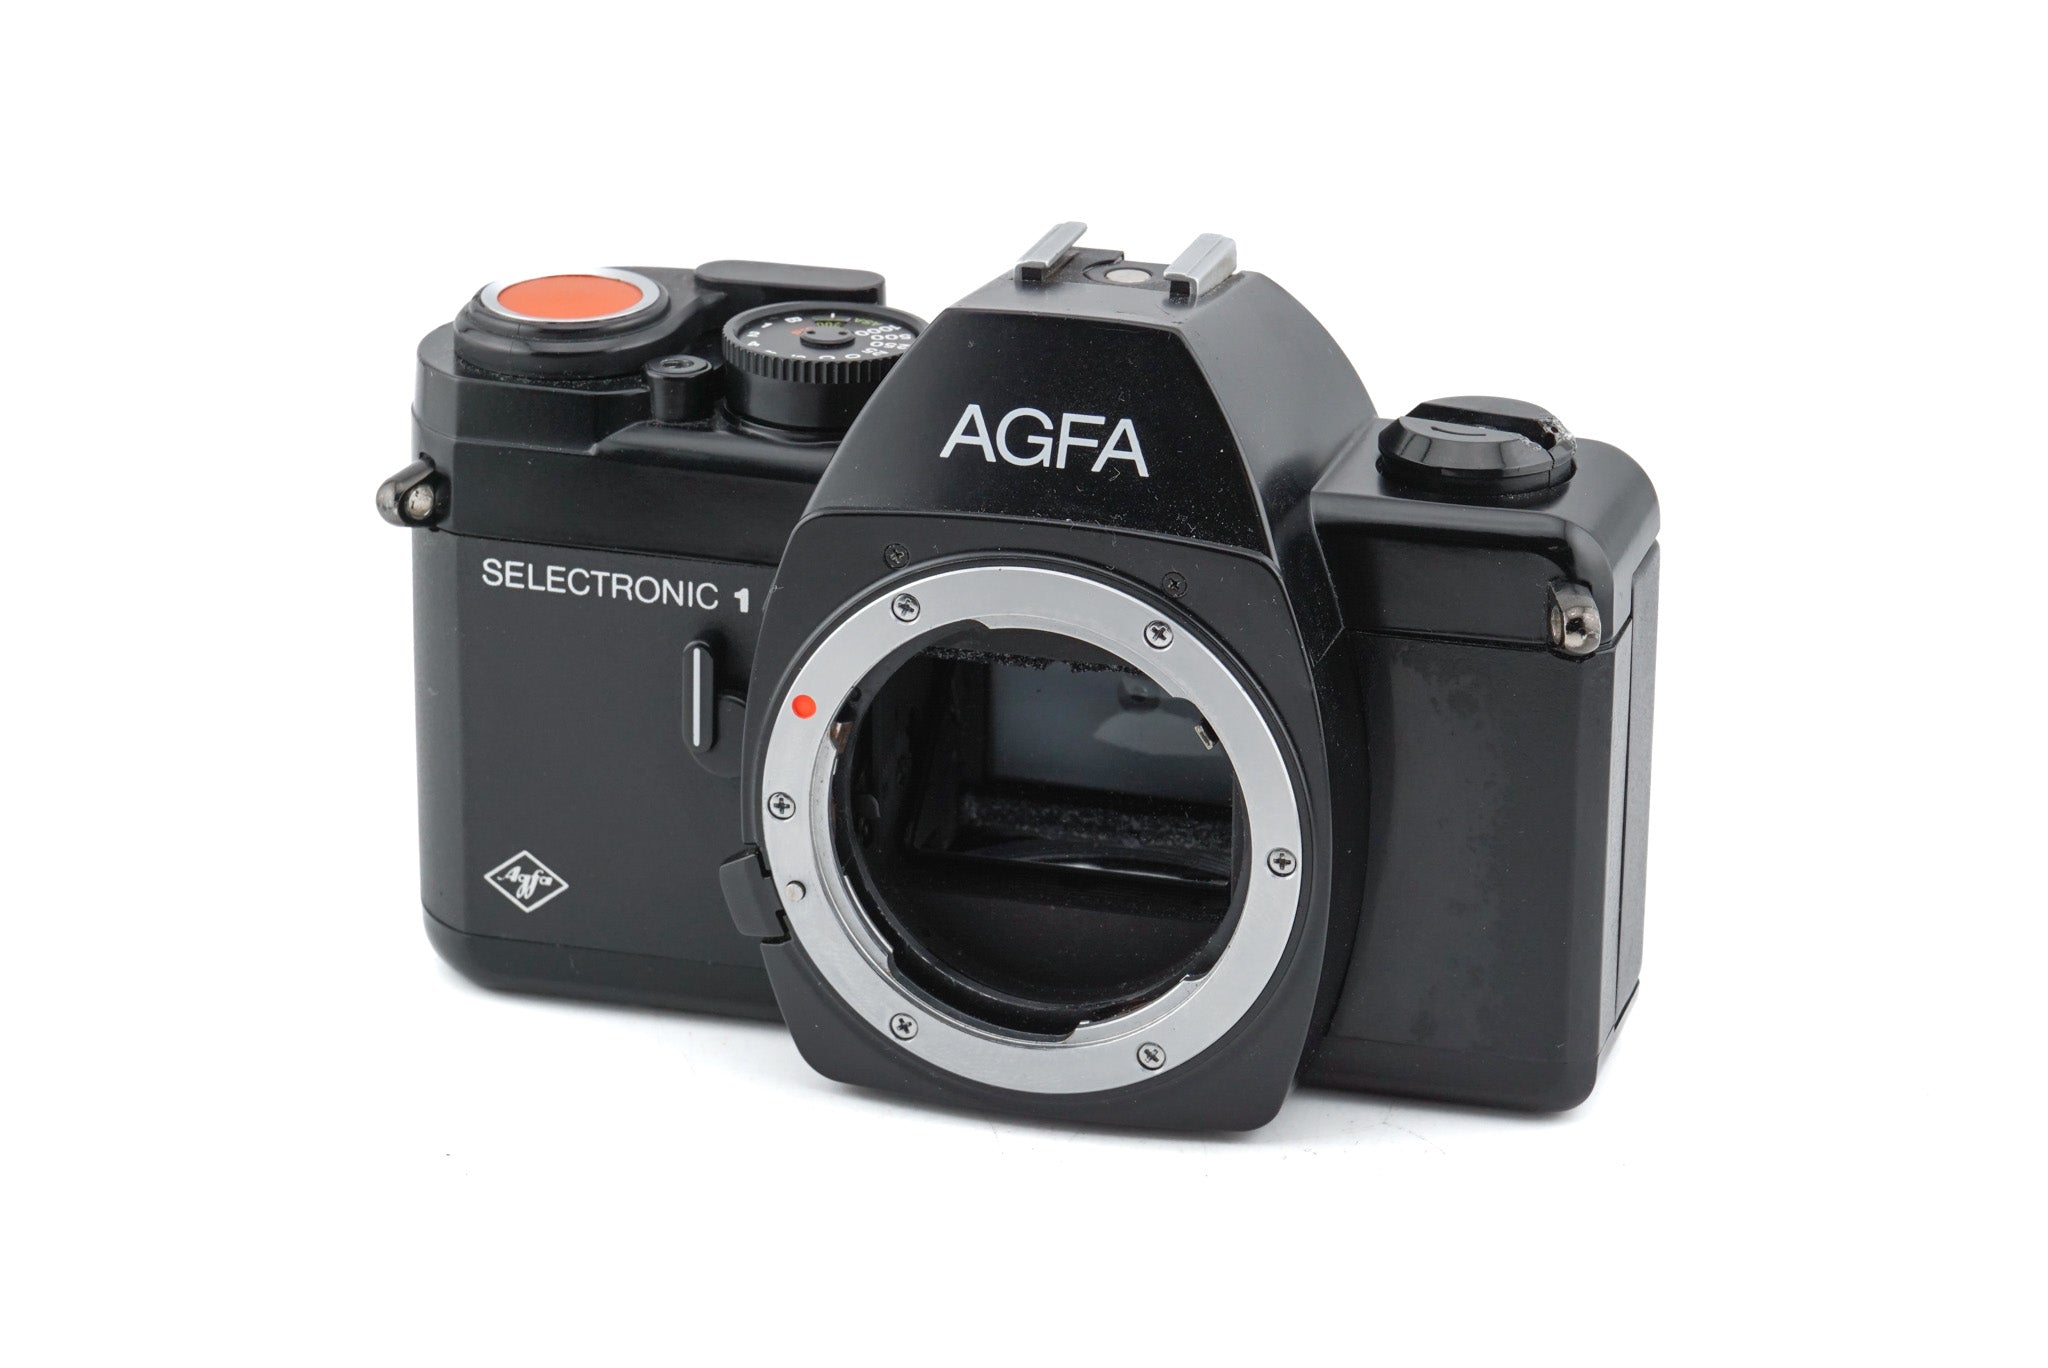 Agfa Selectronic 1 - Camera